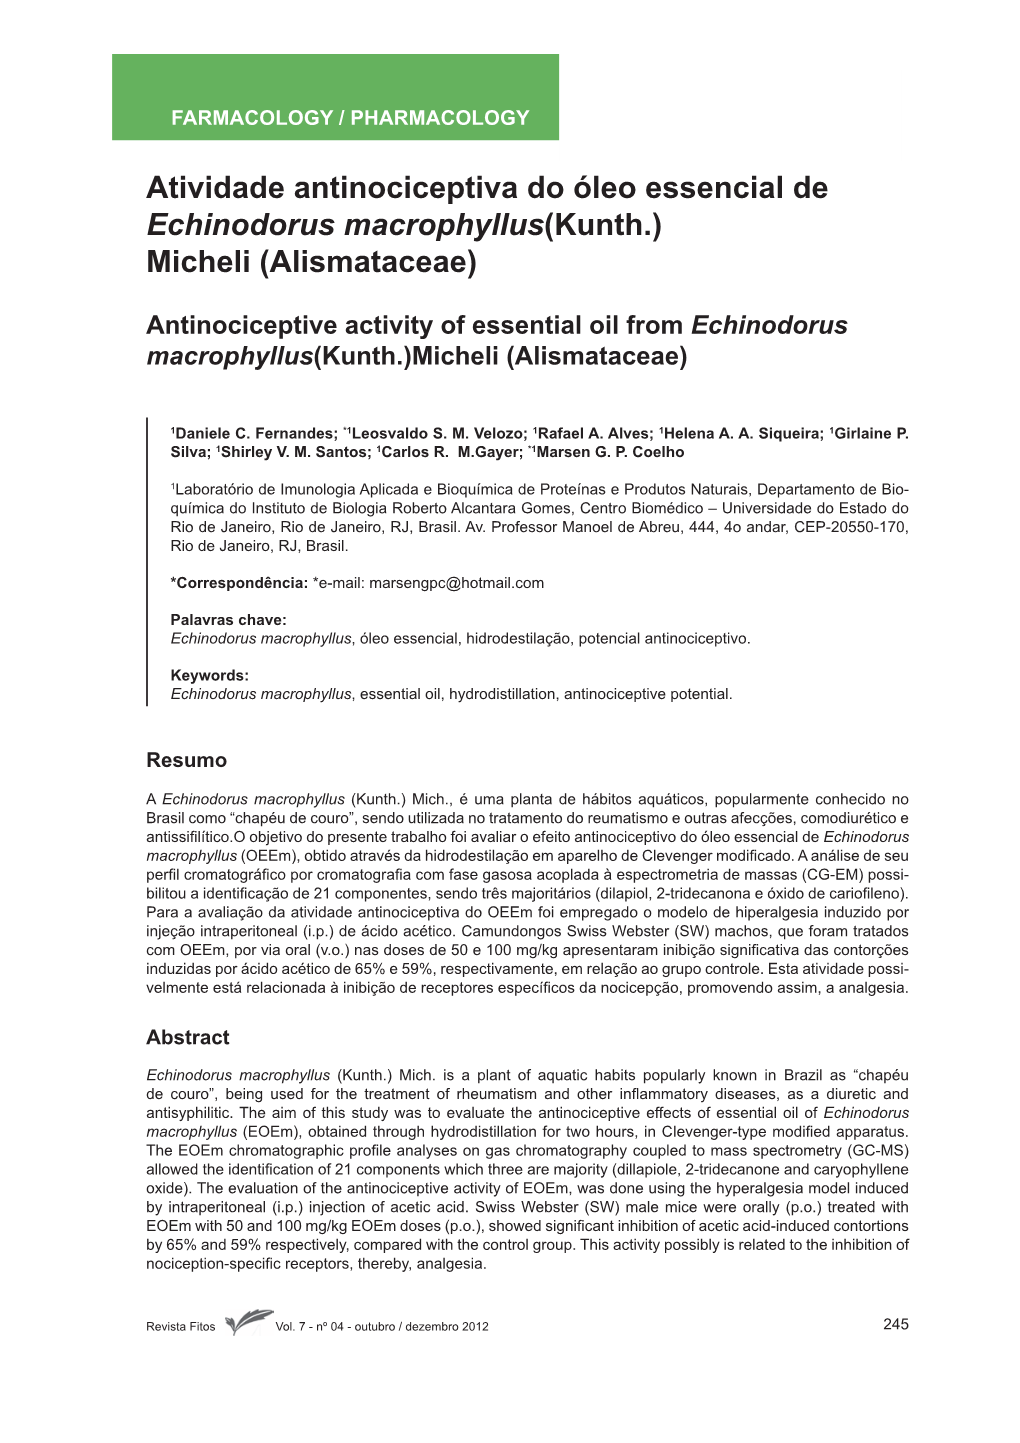 Atividade Antinociceptiva Do Óleo Essencial De Echinodorus Farmacologyfarmacologia / PHARMACOLOGY / Pharmacology Macrophyllus(Kunth.)Micheli (Alismataceae)